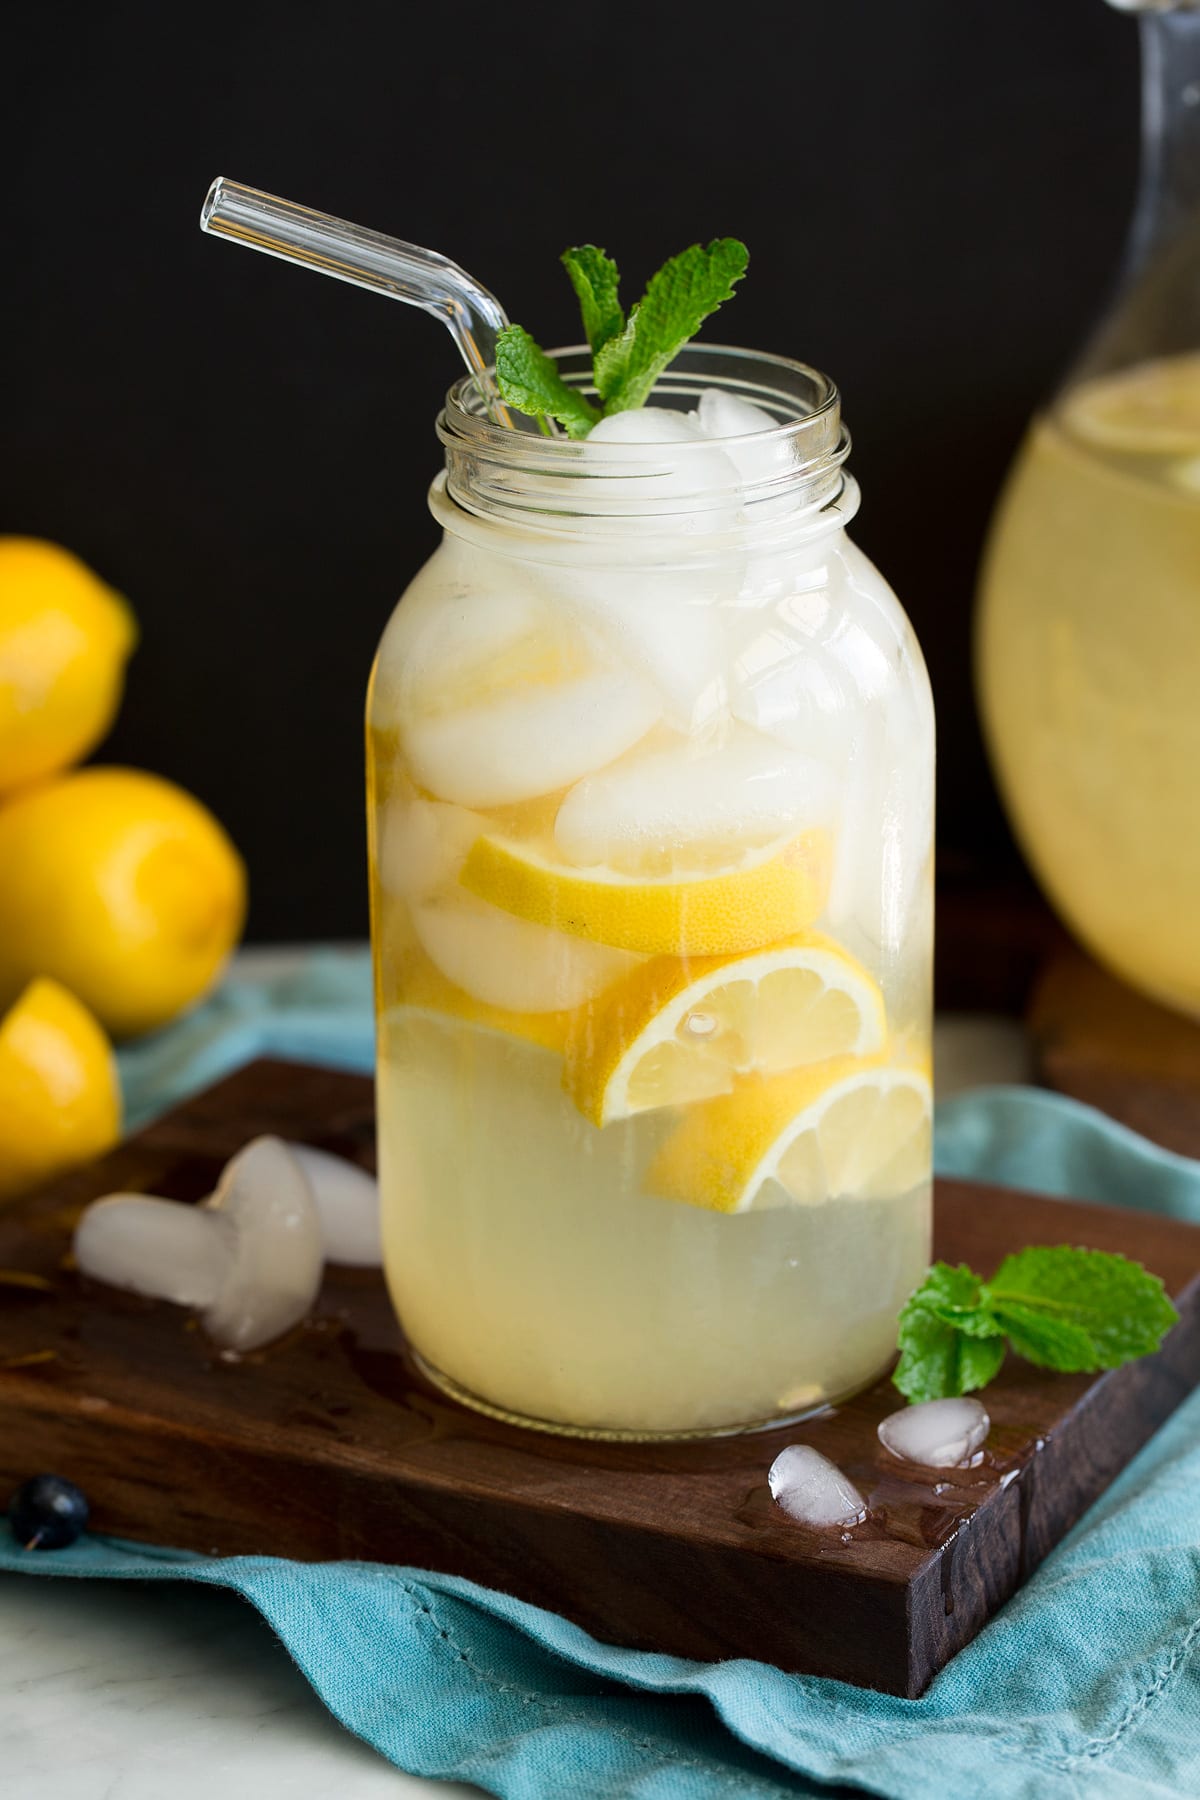 Glass jar full of lemonade and ice.